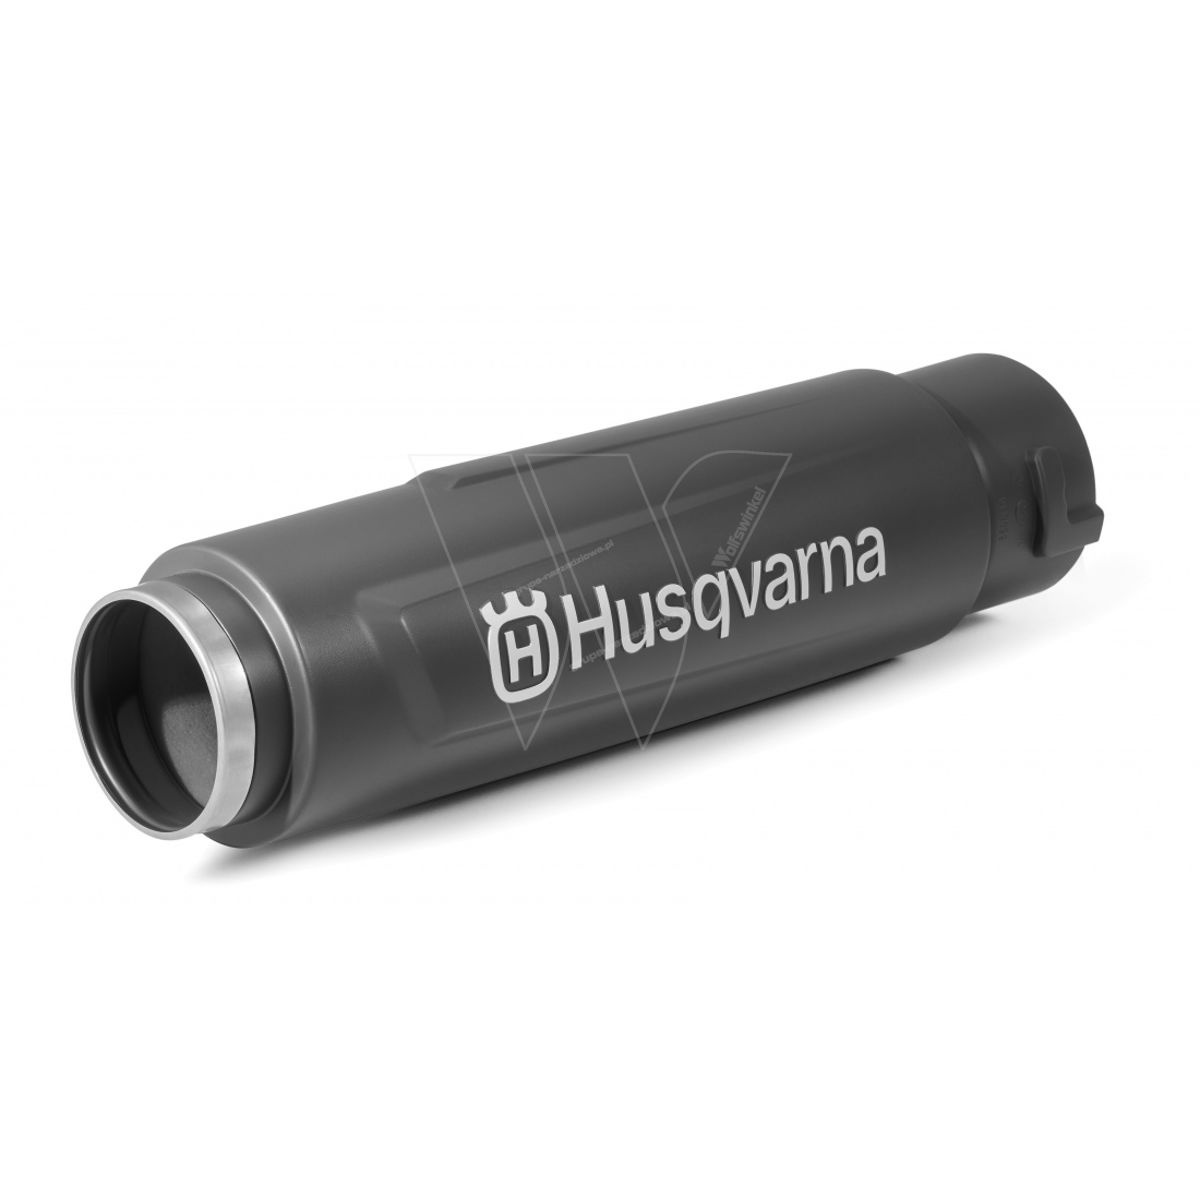 Buy Husqvarna silent blowpipe battery leaf blower 589811701 Wolfswinkel  your Husqvarna specialist